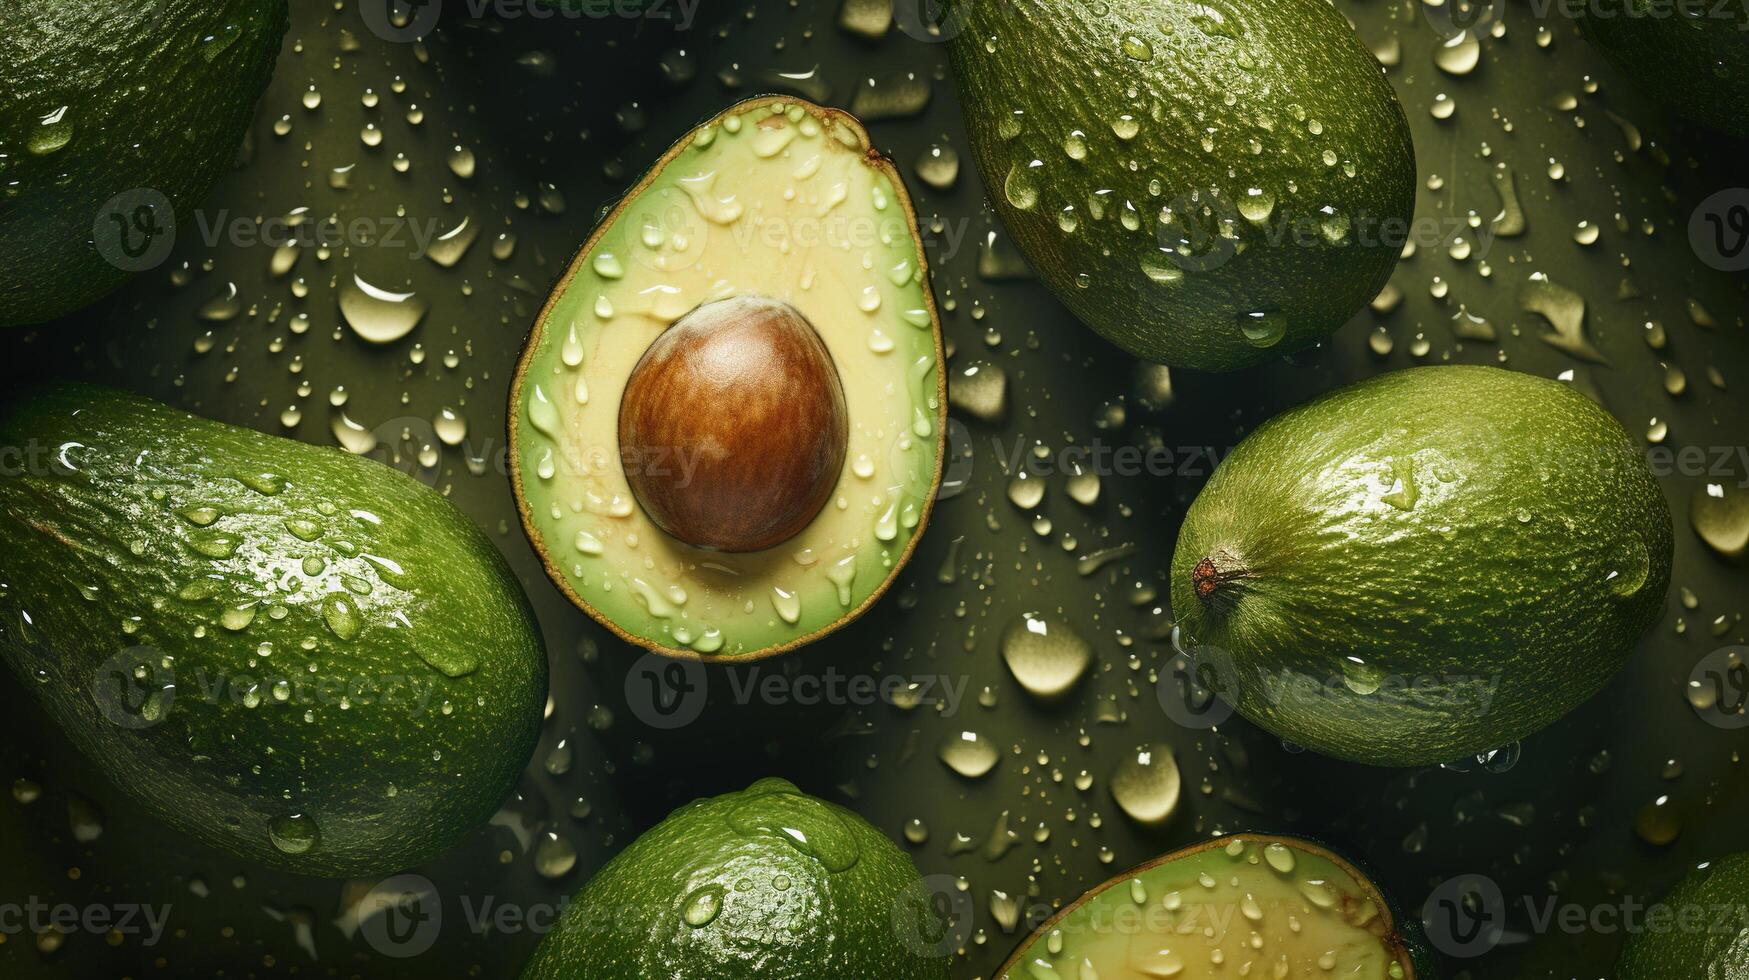 generativo ai, macro Fresco jugoso medio y todo de verde aguacate Fruta antecedentes como modelo. de cerca foto con gotas de agua